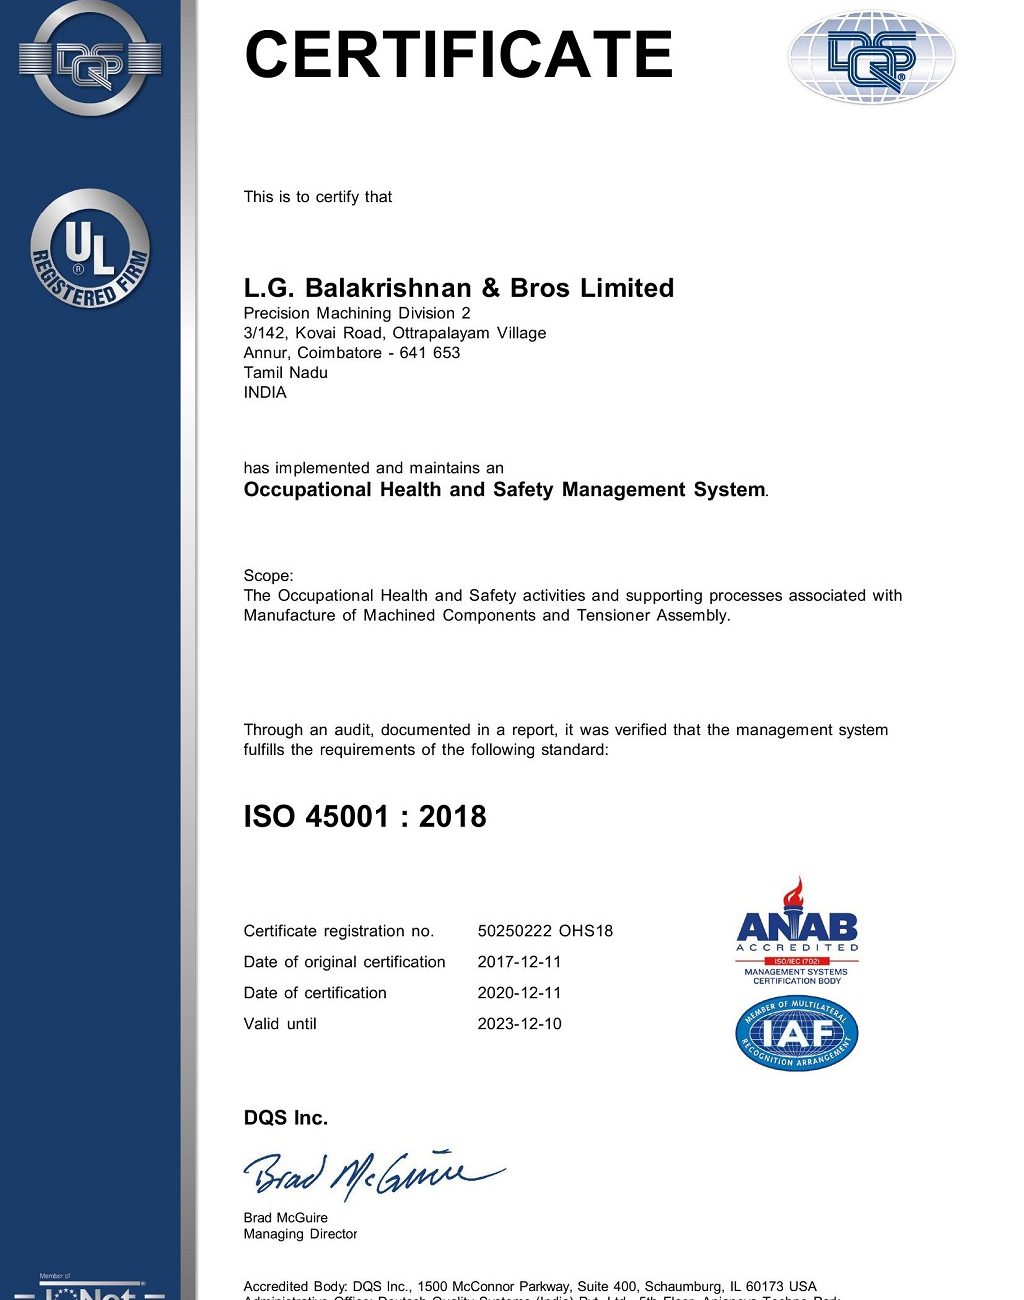 LGB PMD2_Annur ISO 450012018